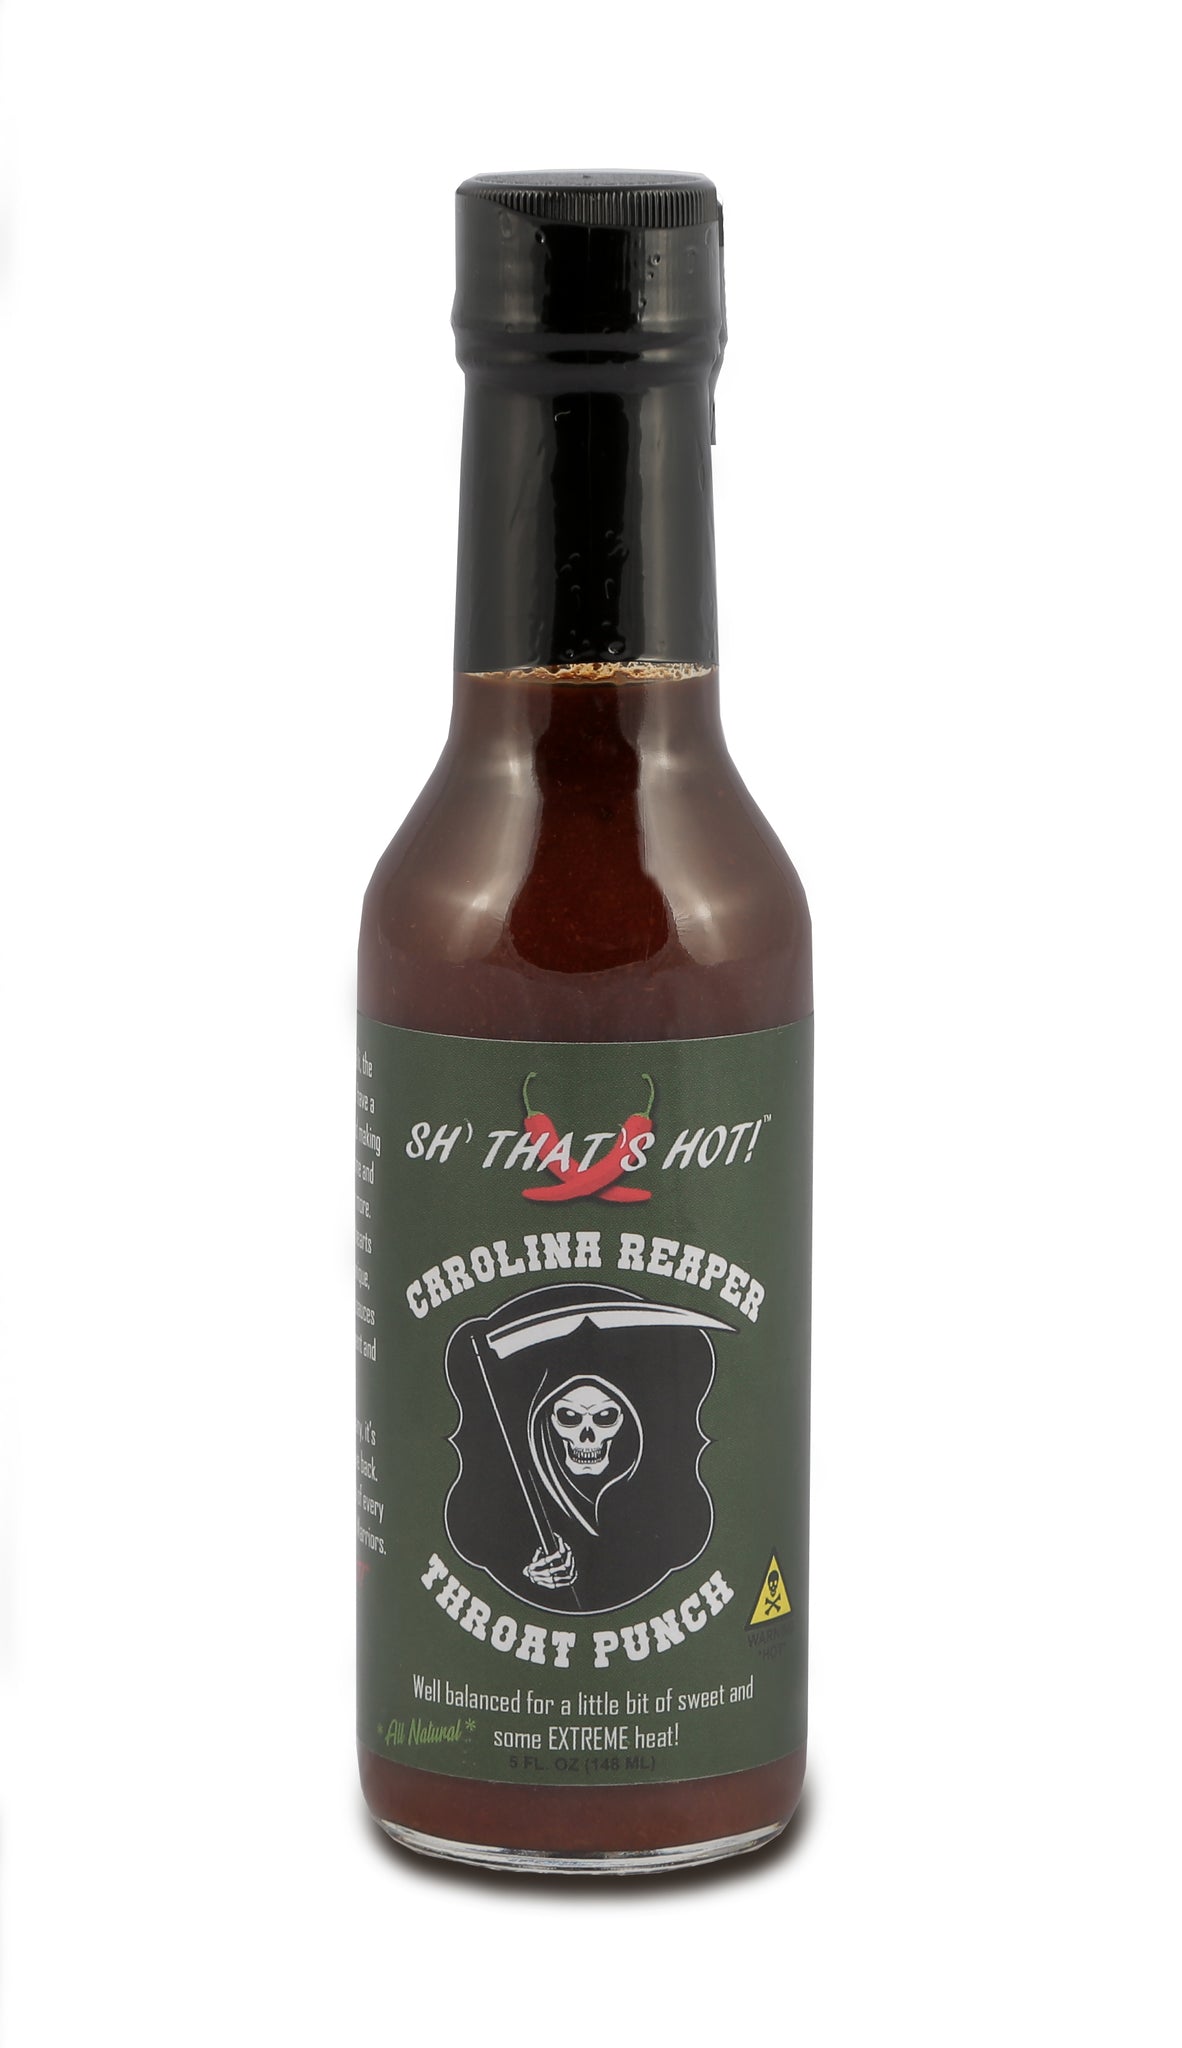 Carolina Reaper Throat Punch hot sauce – SH' THAT'S HOT!